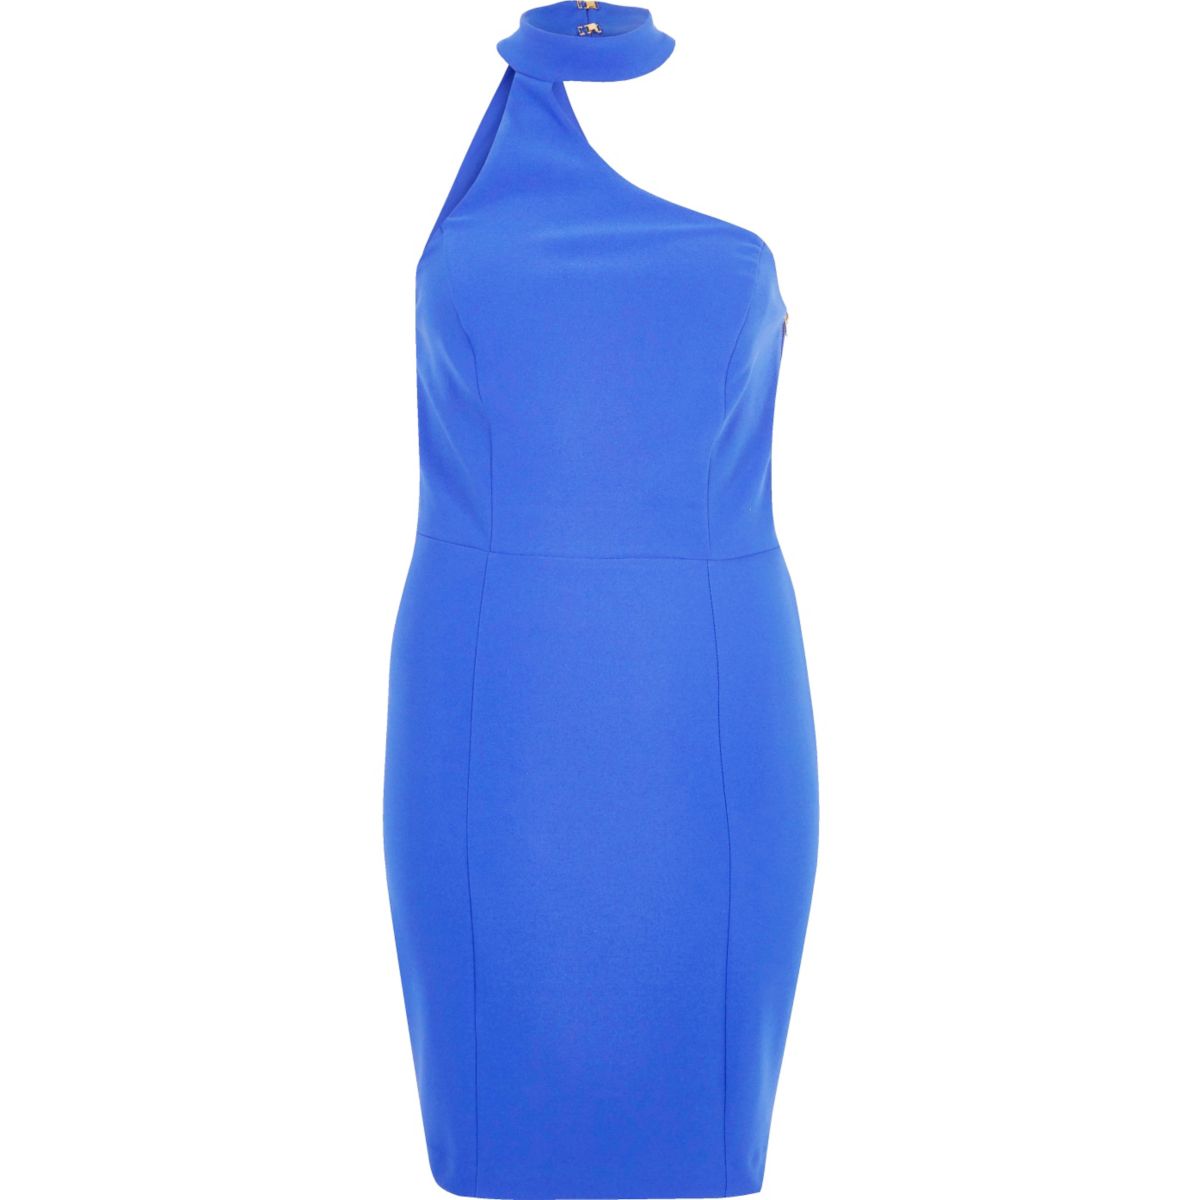 Blue one shoulder choker dress - Dresses - Sale - women